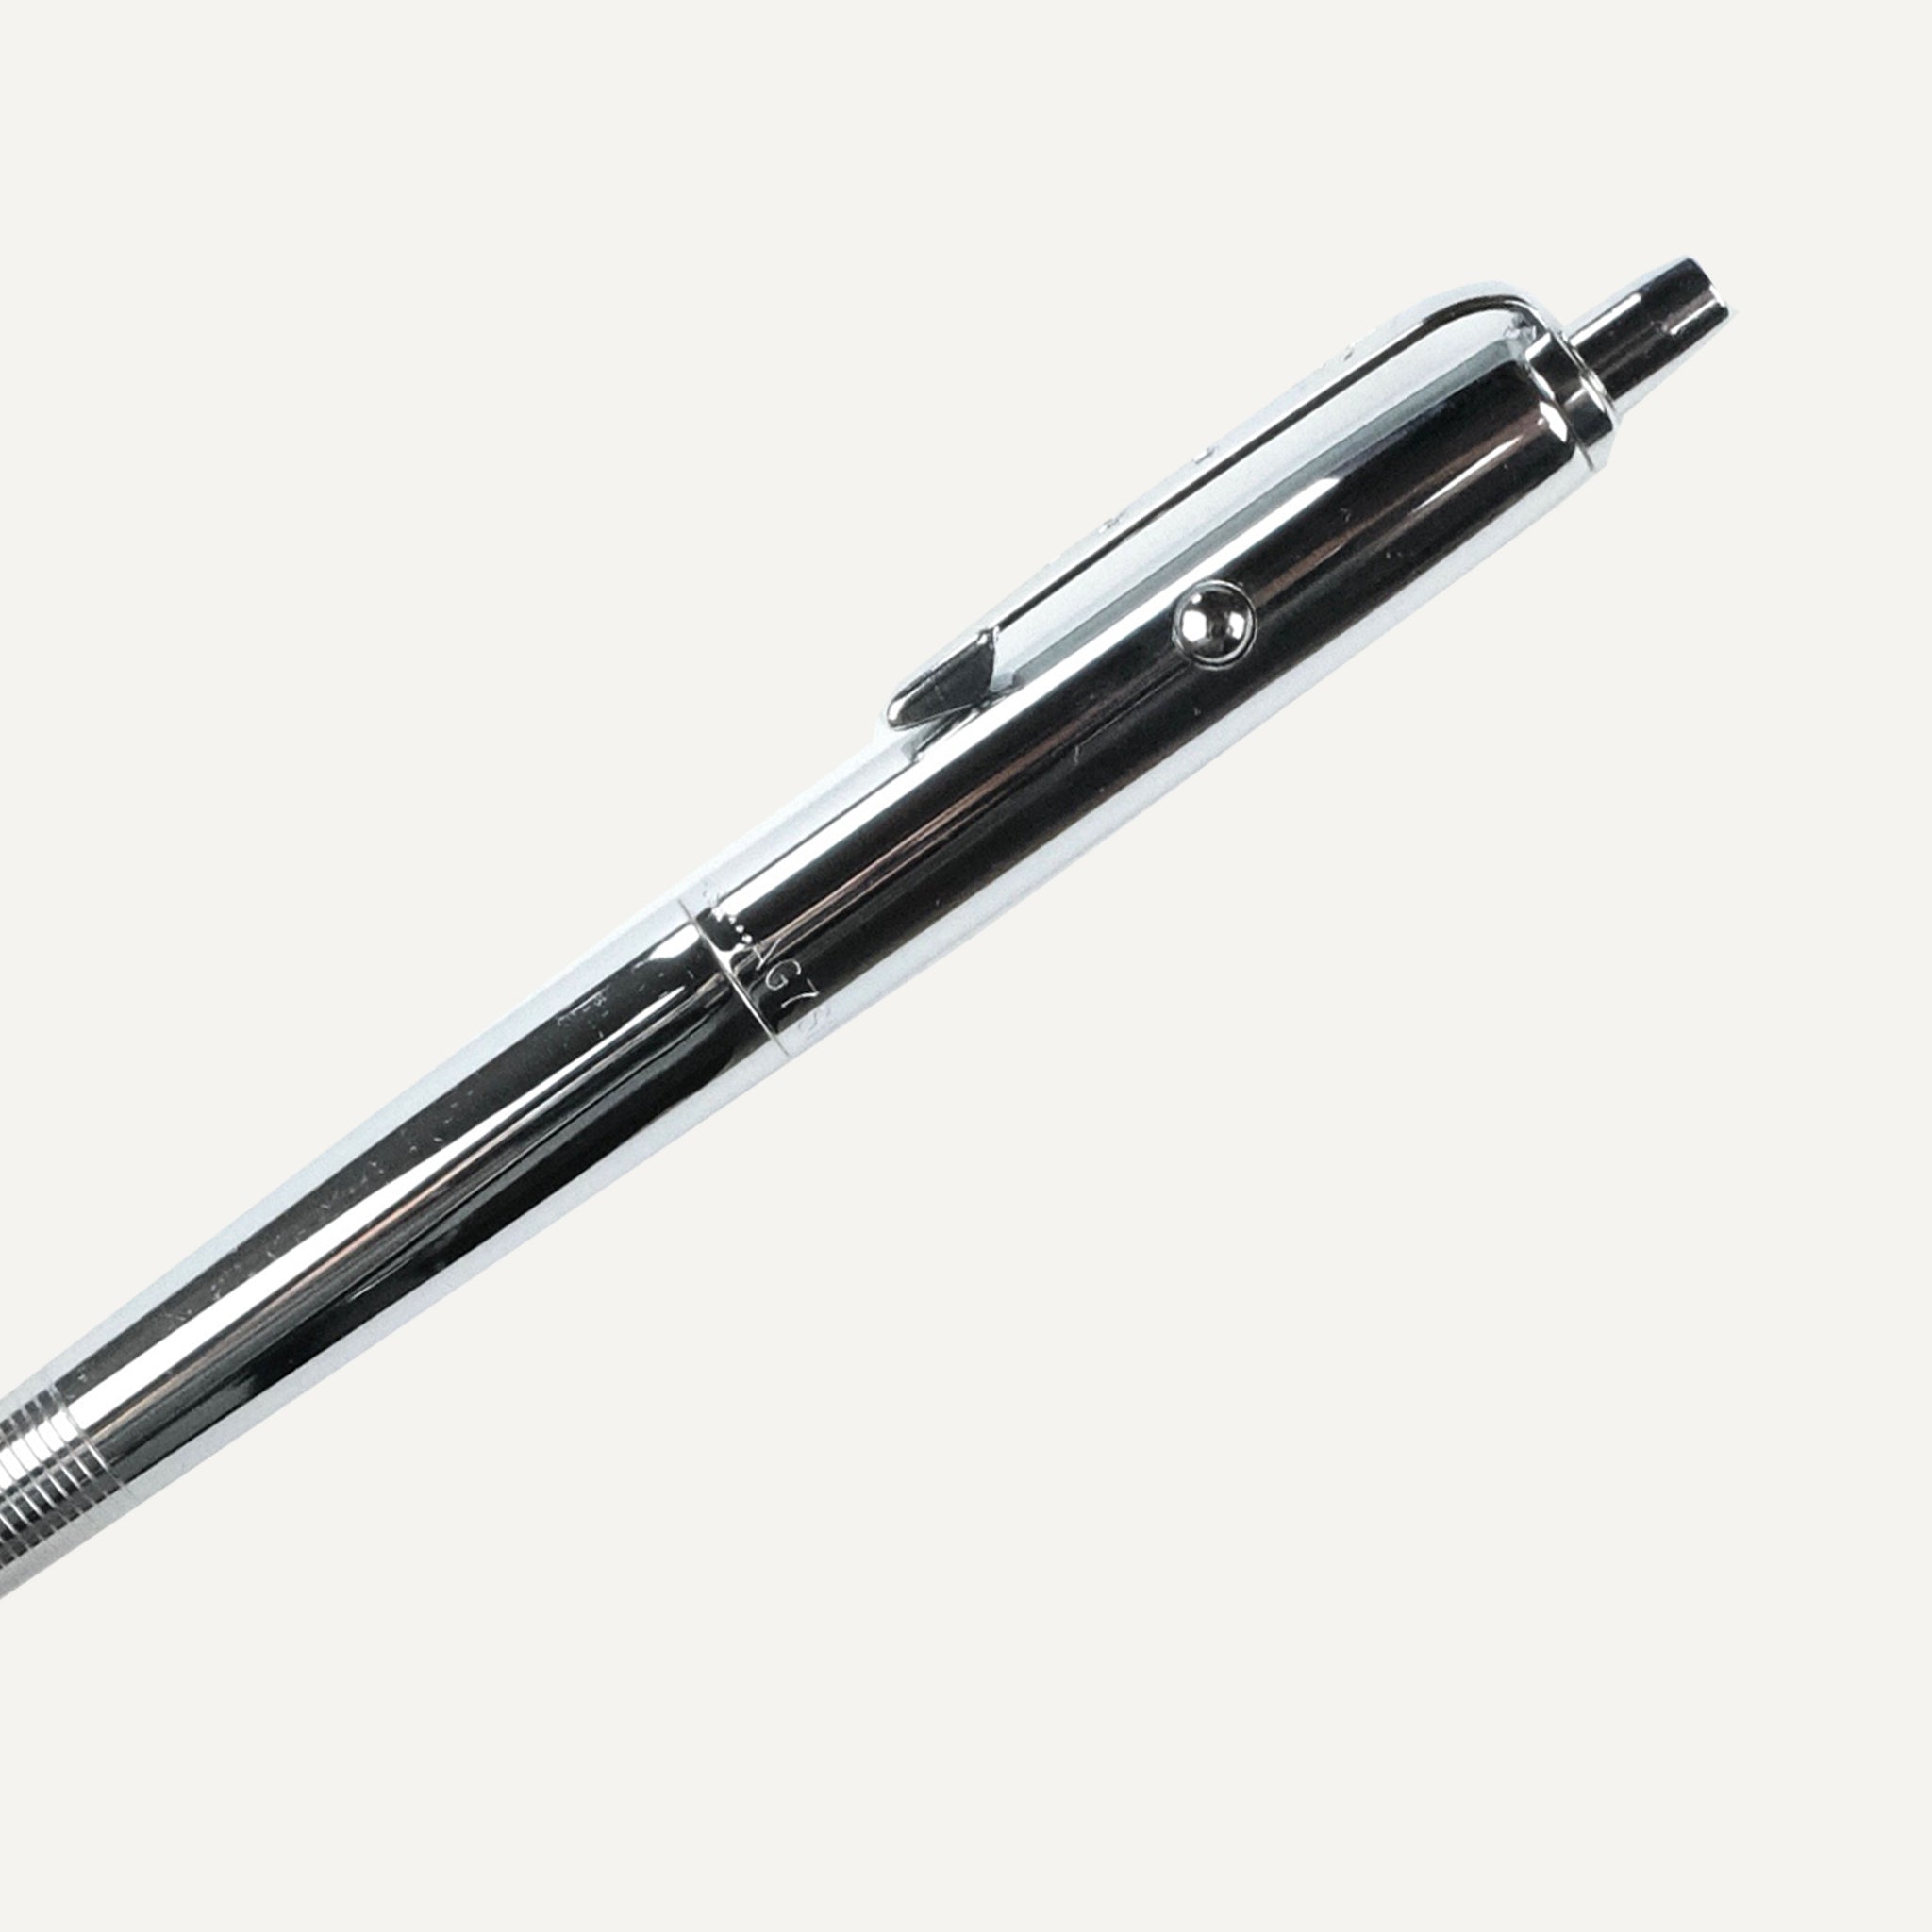 Fisher Space Pen - The Original Astronaut Pen - AG7 Series - Chrome